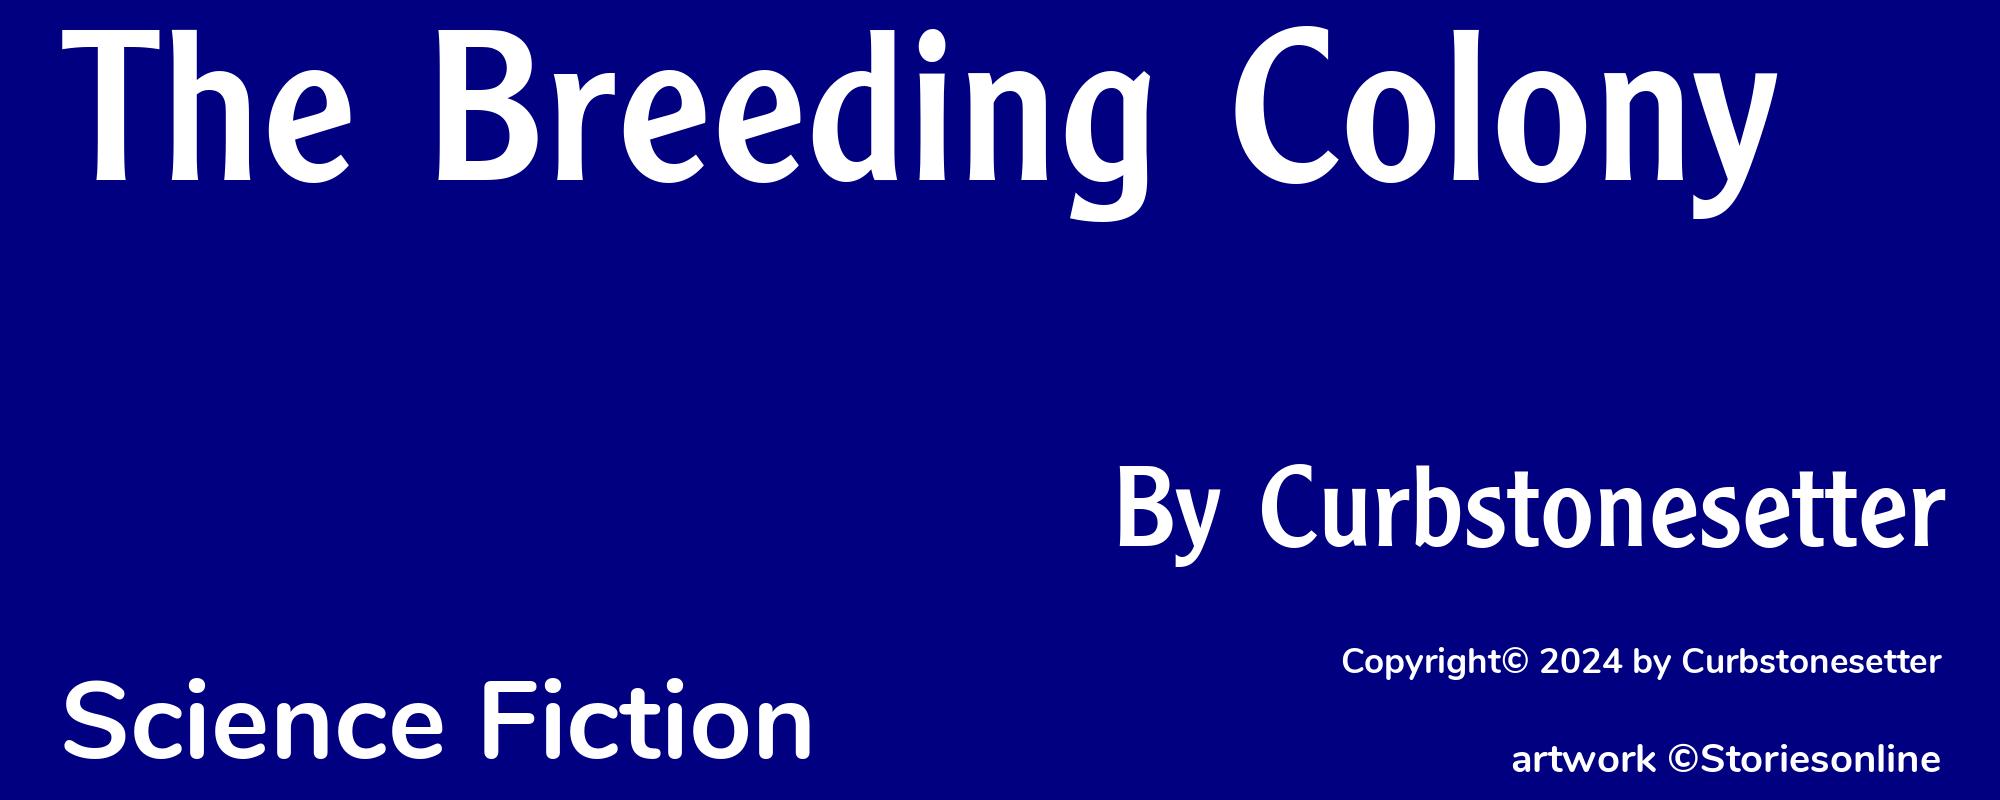 The Breeding Colony - Cover